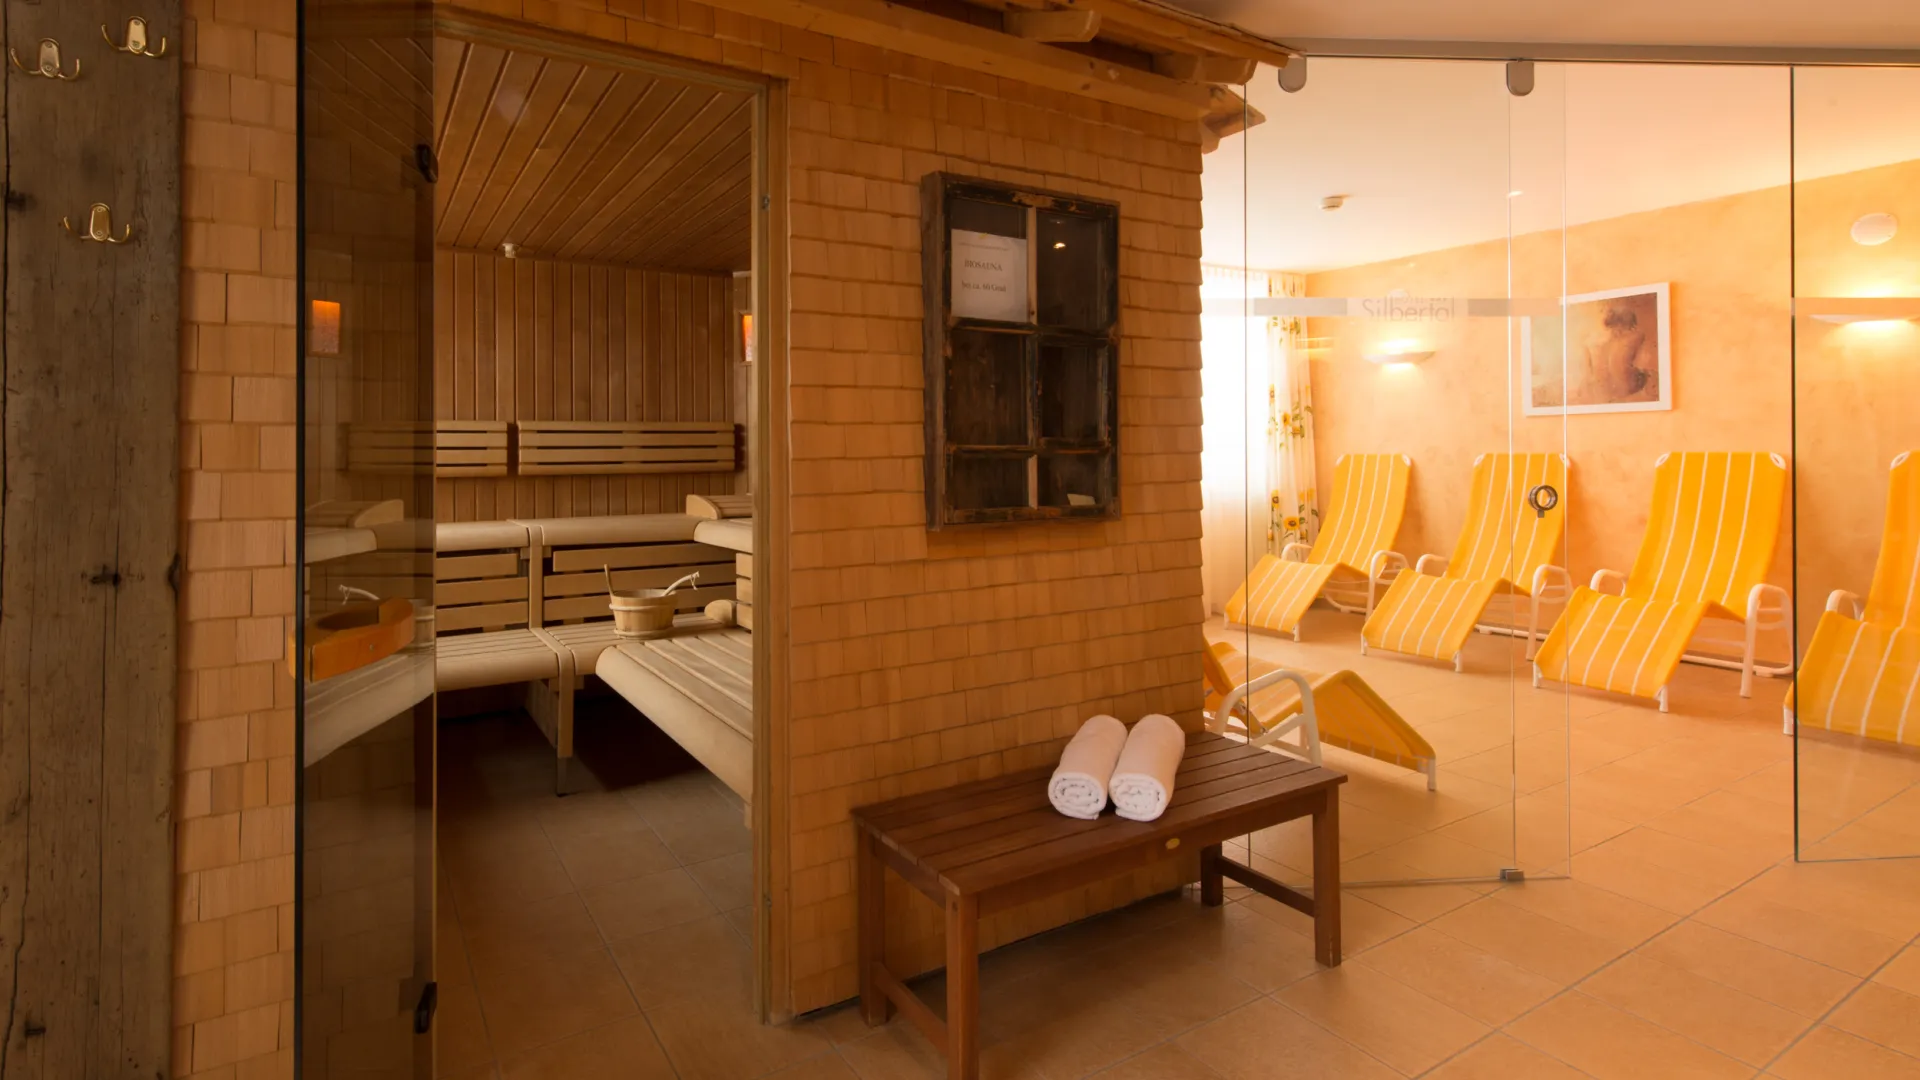 Wellnessoase im Hotel Silbertal, Sauna mit Ruheraum